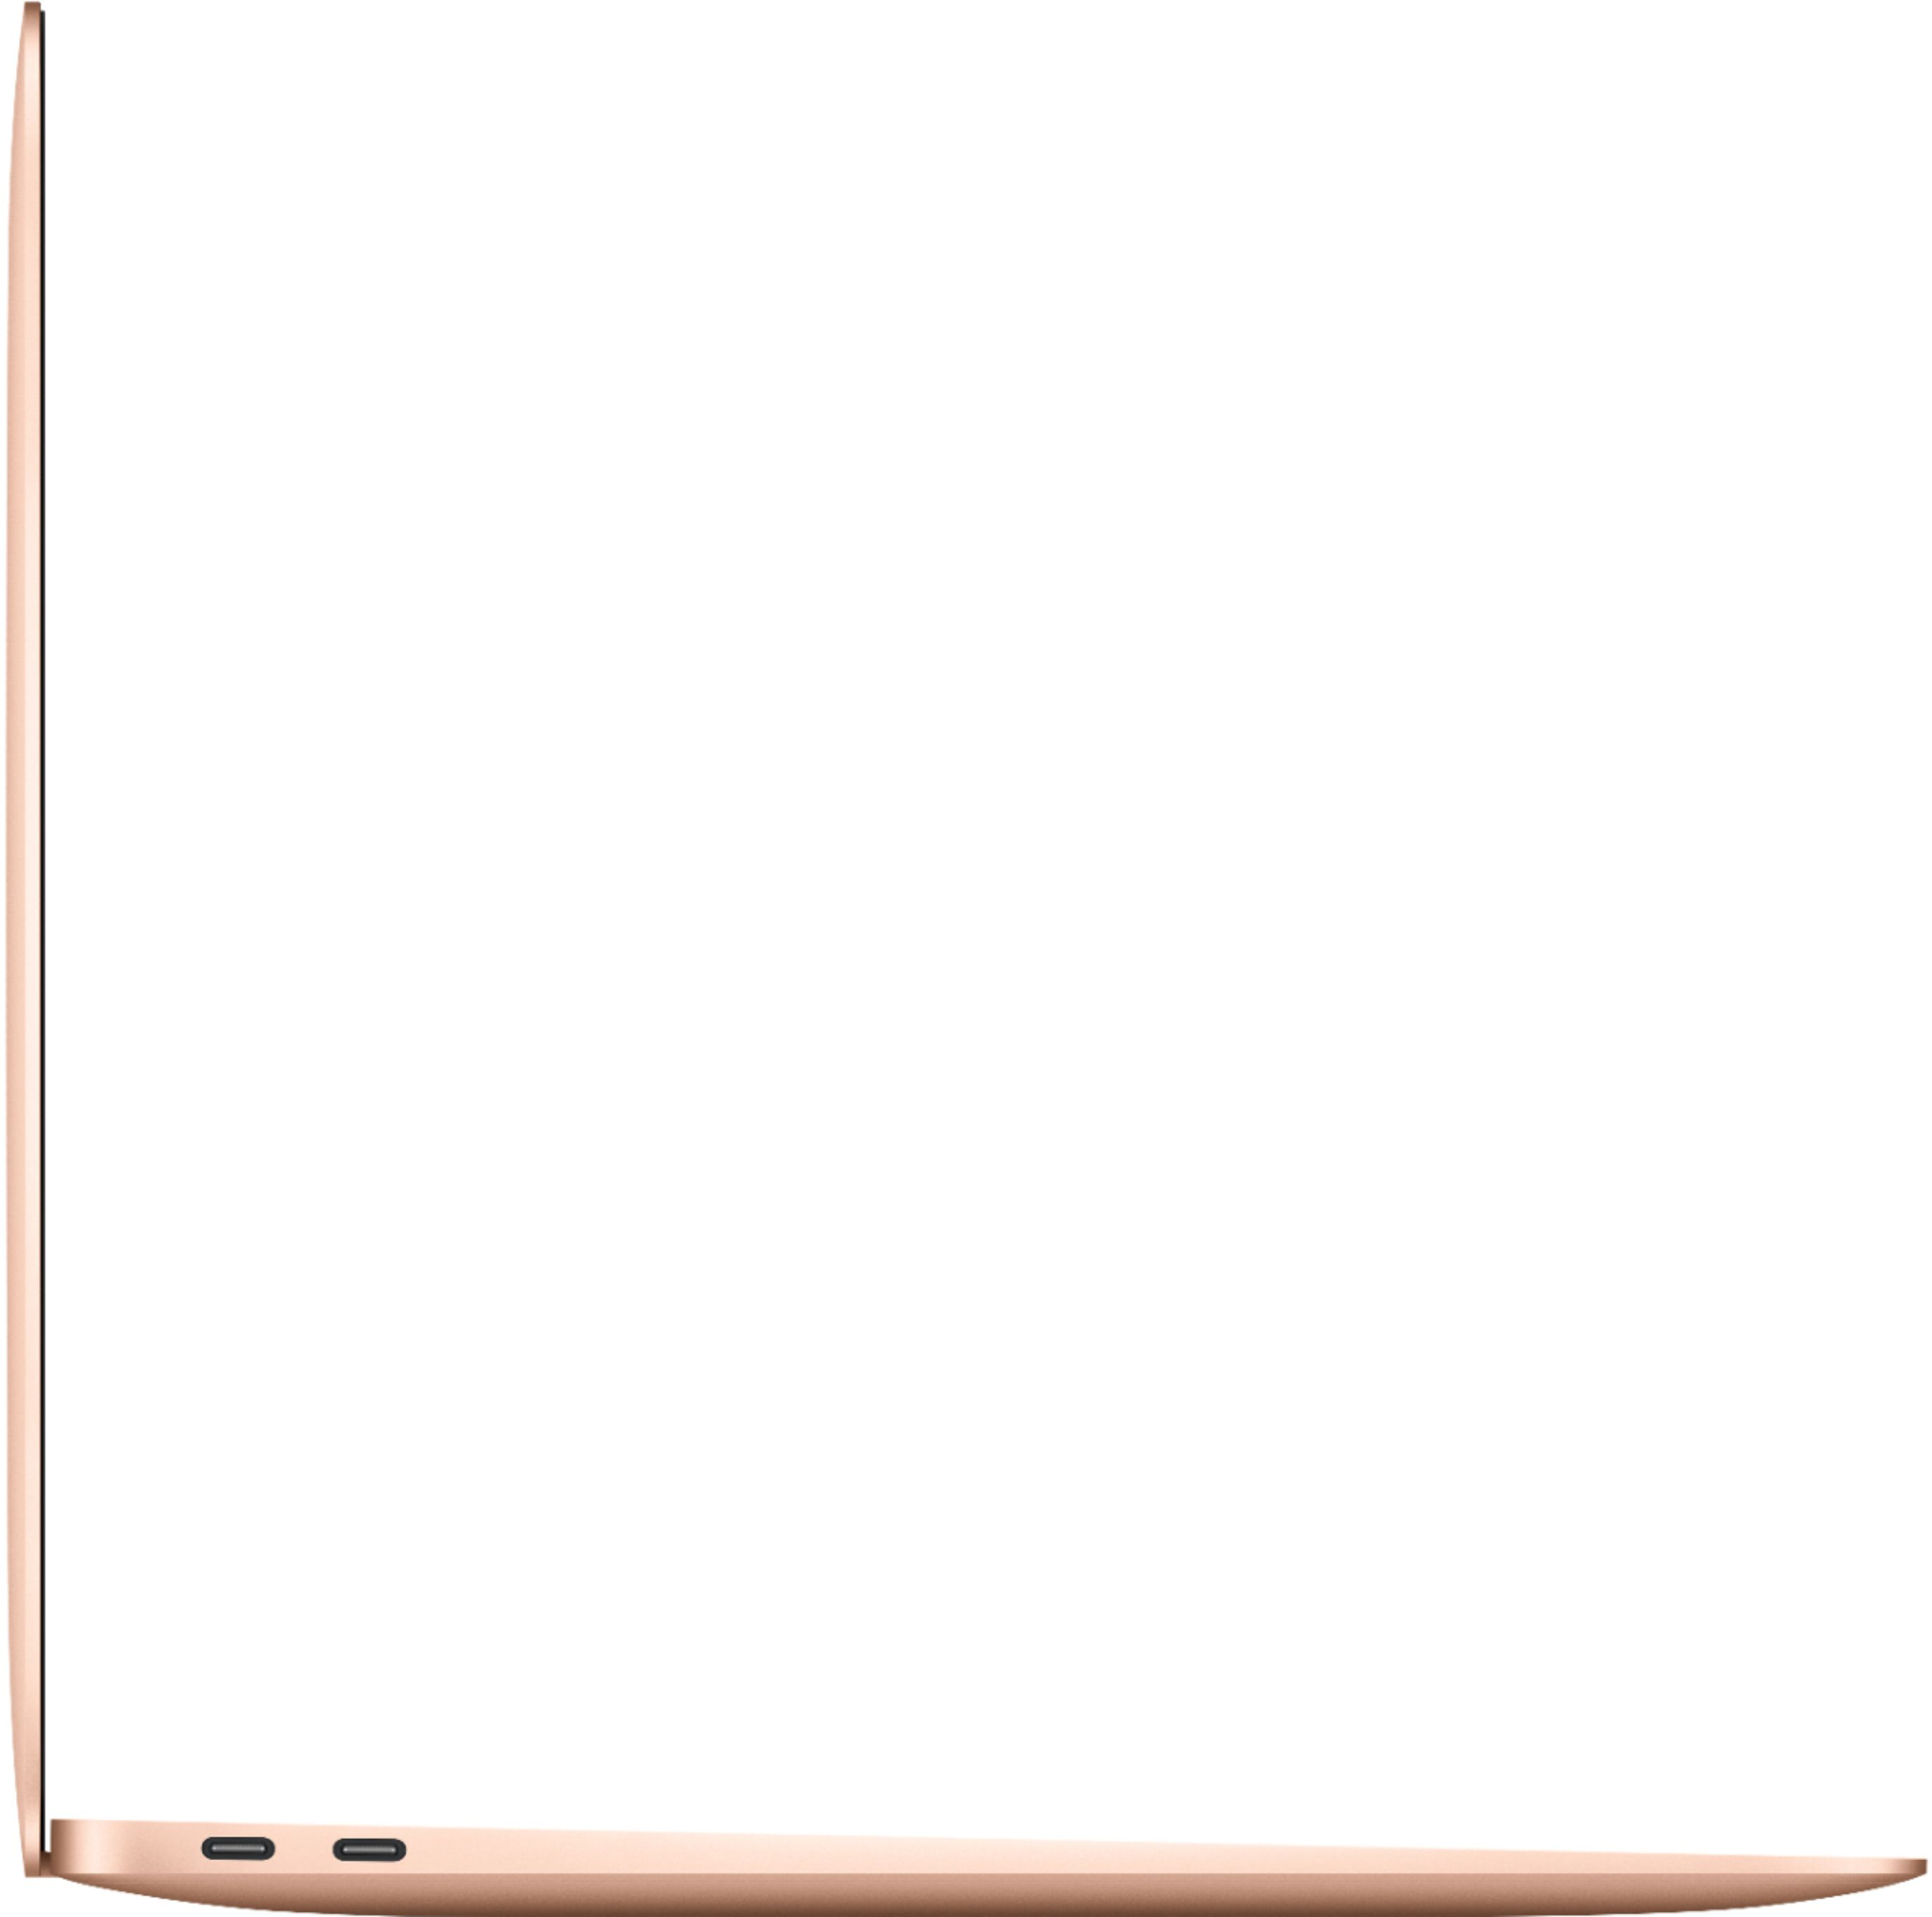 Apple MacBook Air 13.3" Laptop - Apple M1 chip - 8GB Memory - 256GB SSD (Late 2020) - Gold